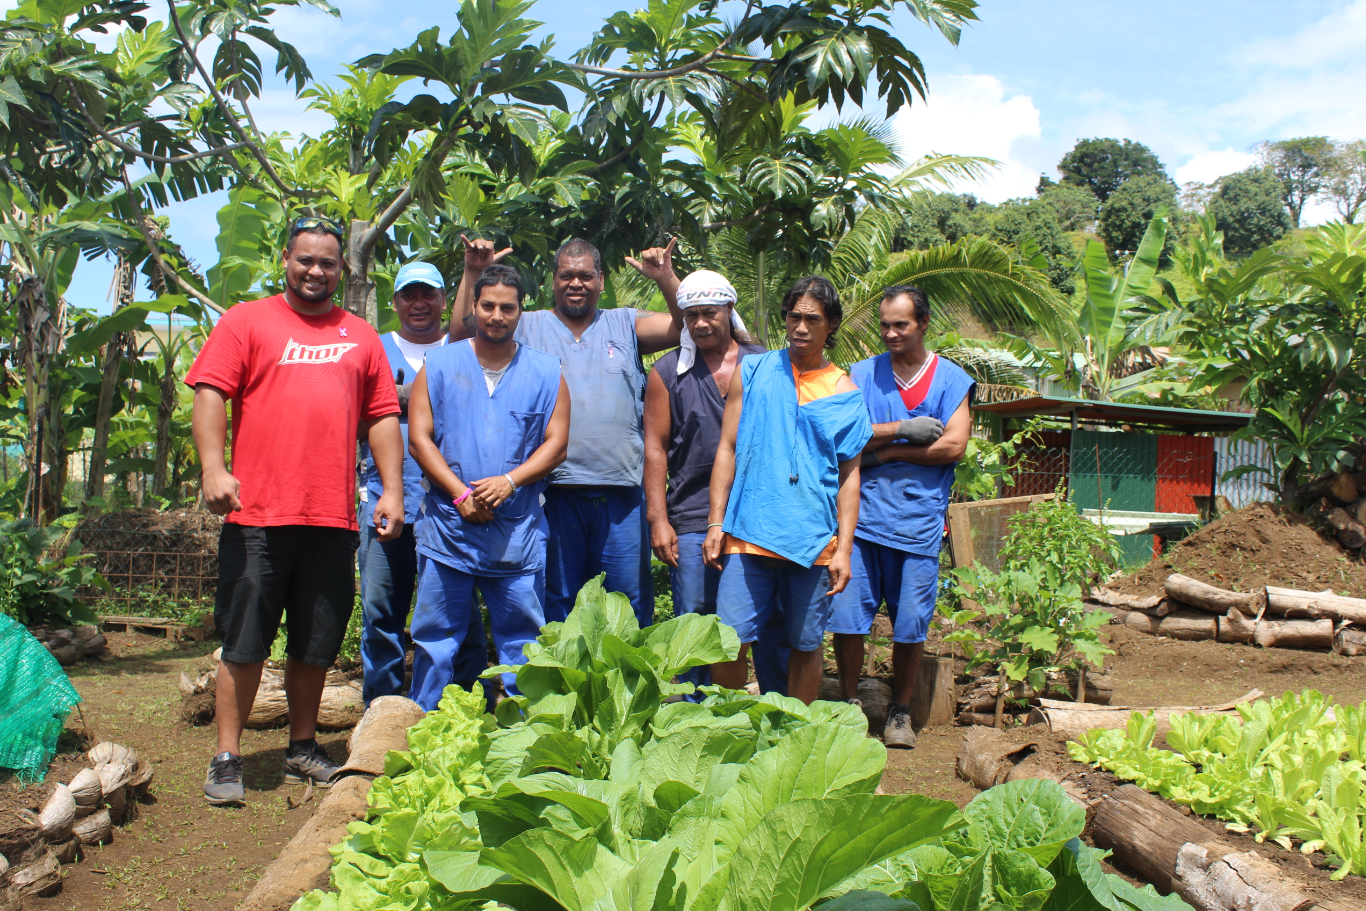 Une partie des jardiniers en herbe du centre Taatira Huma Tahiti Iti à Taravao devant leur fa'a'apu.